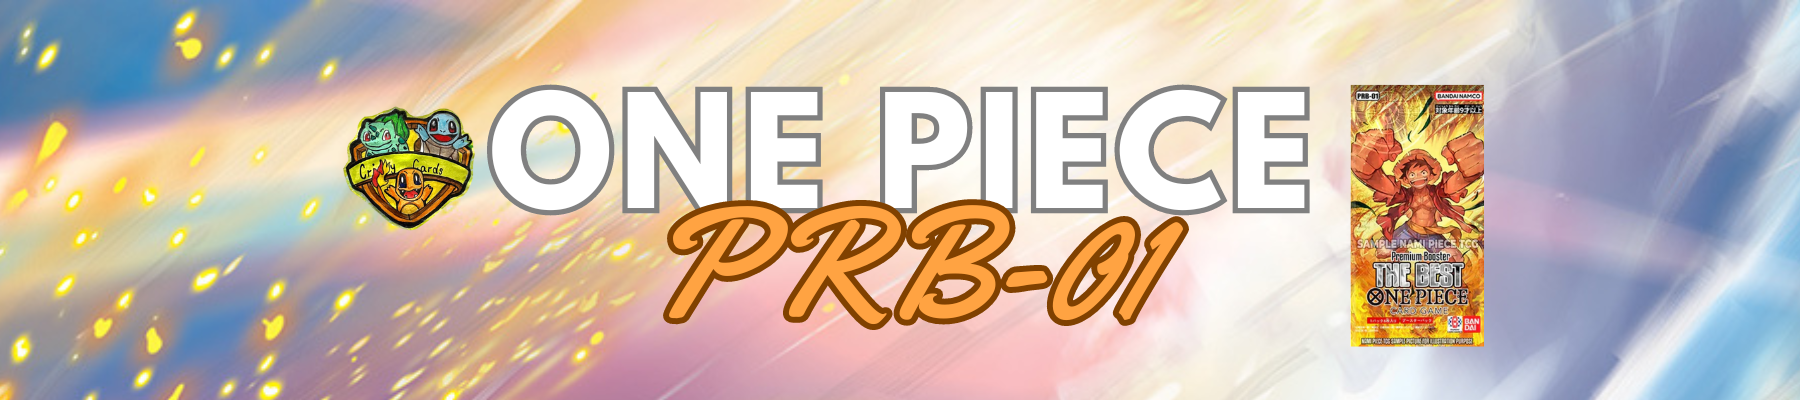 One Piece PRB-01 Premium